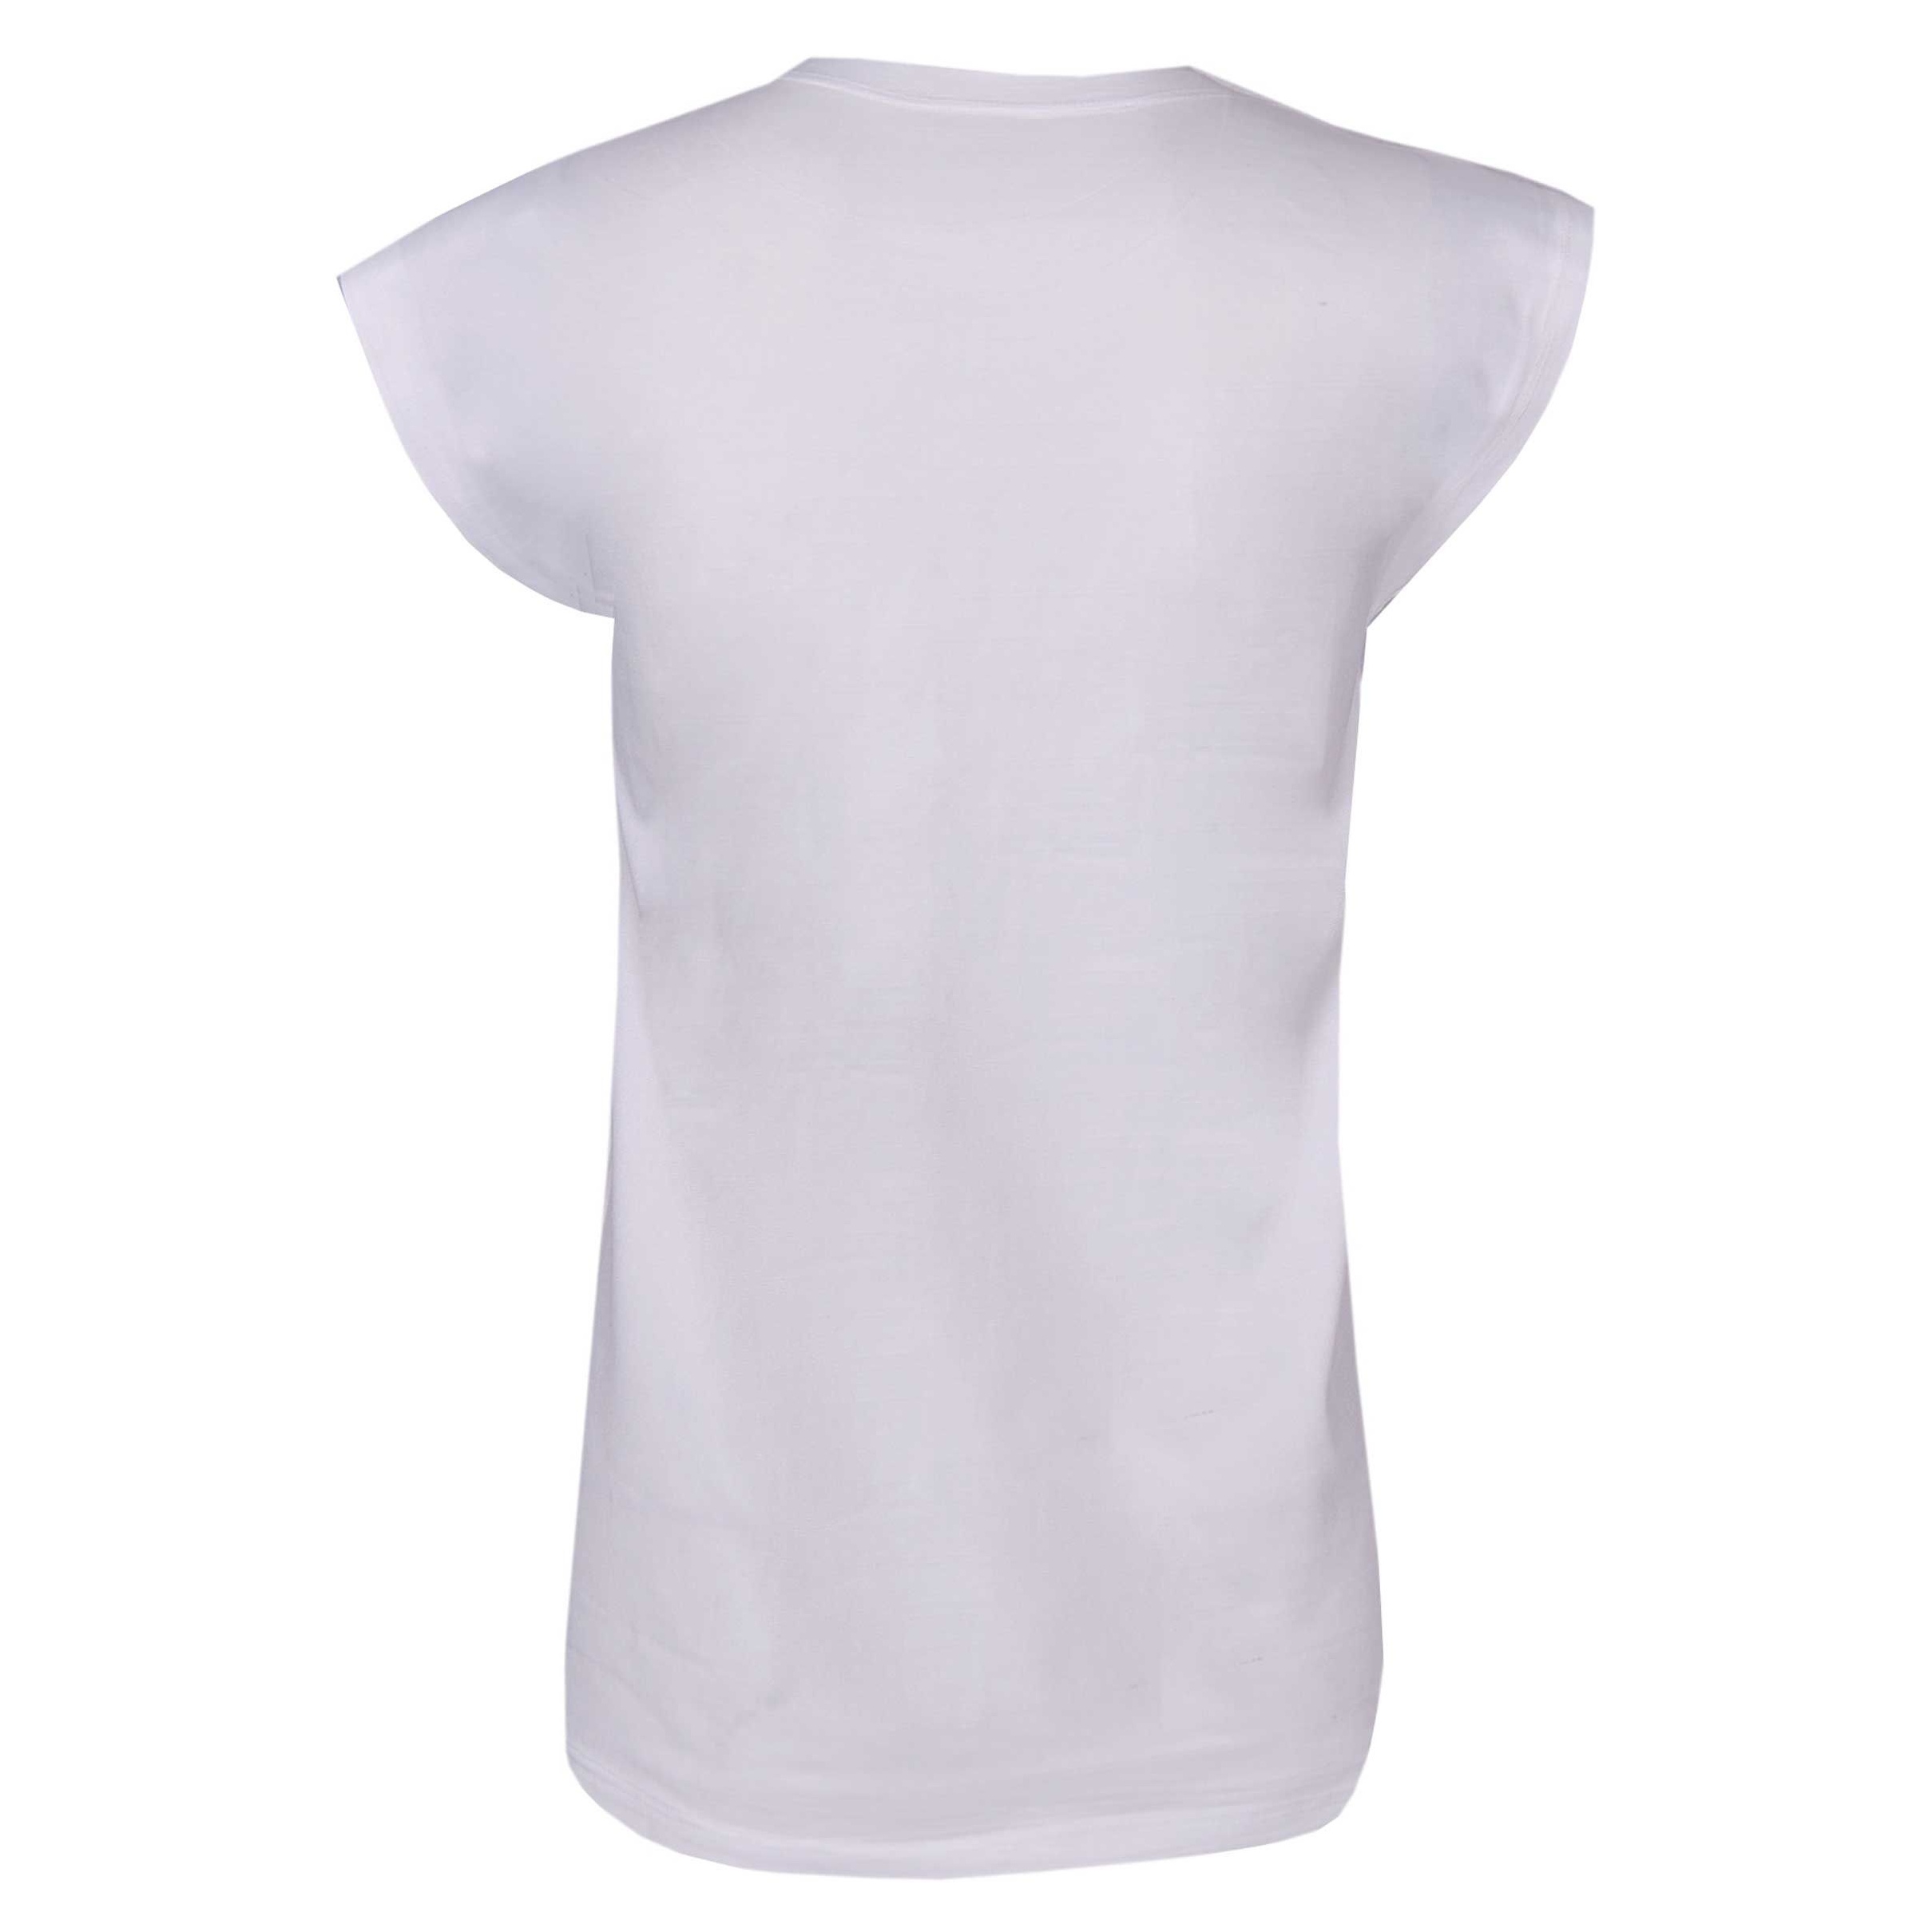 تی شرت زنانه کد 23-770